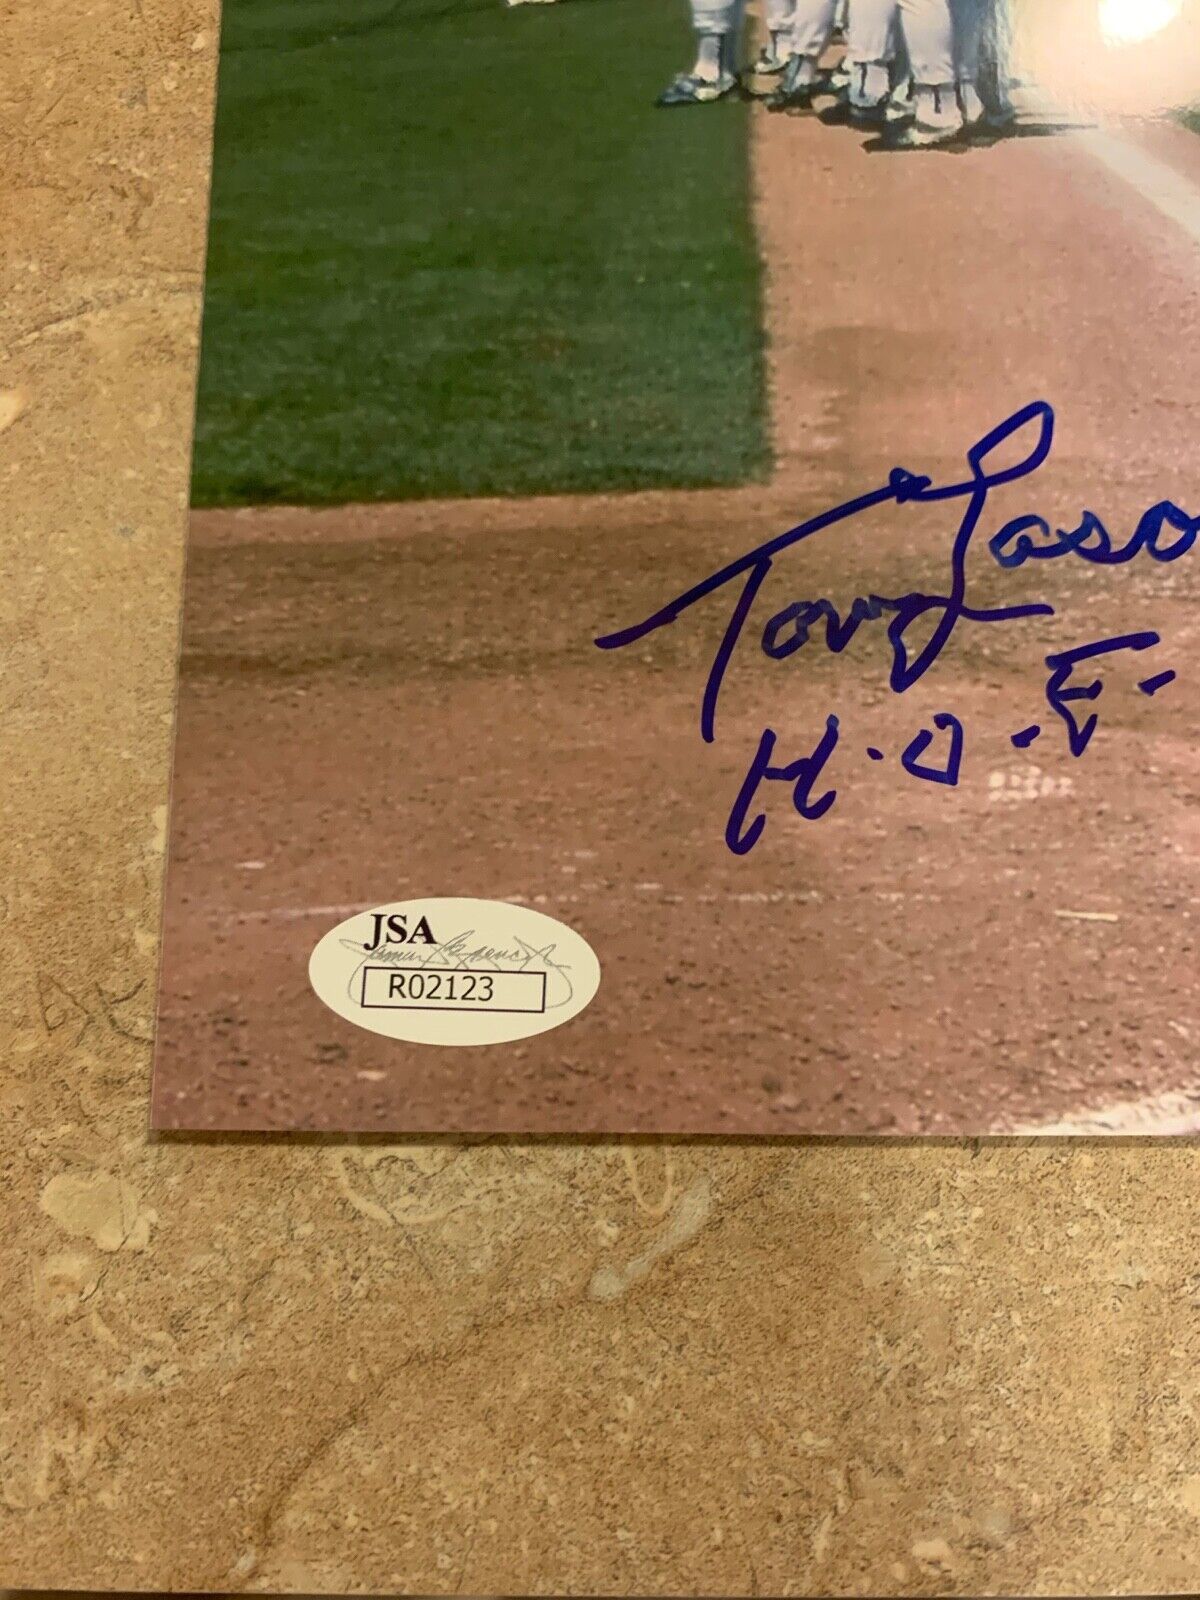 Tom Lasorda Signed Photo Brooklyn Dodgers Hall of Famer 1997 JSA COA R02123